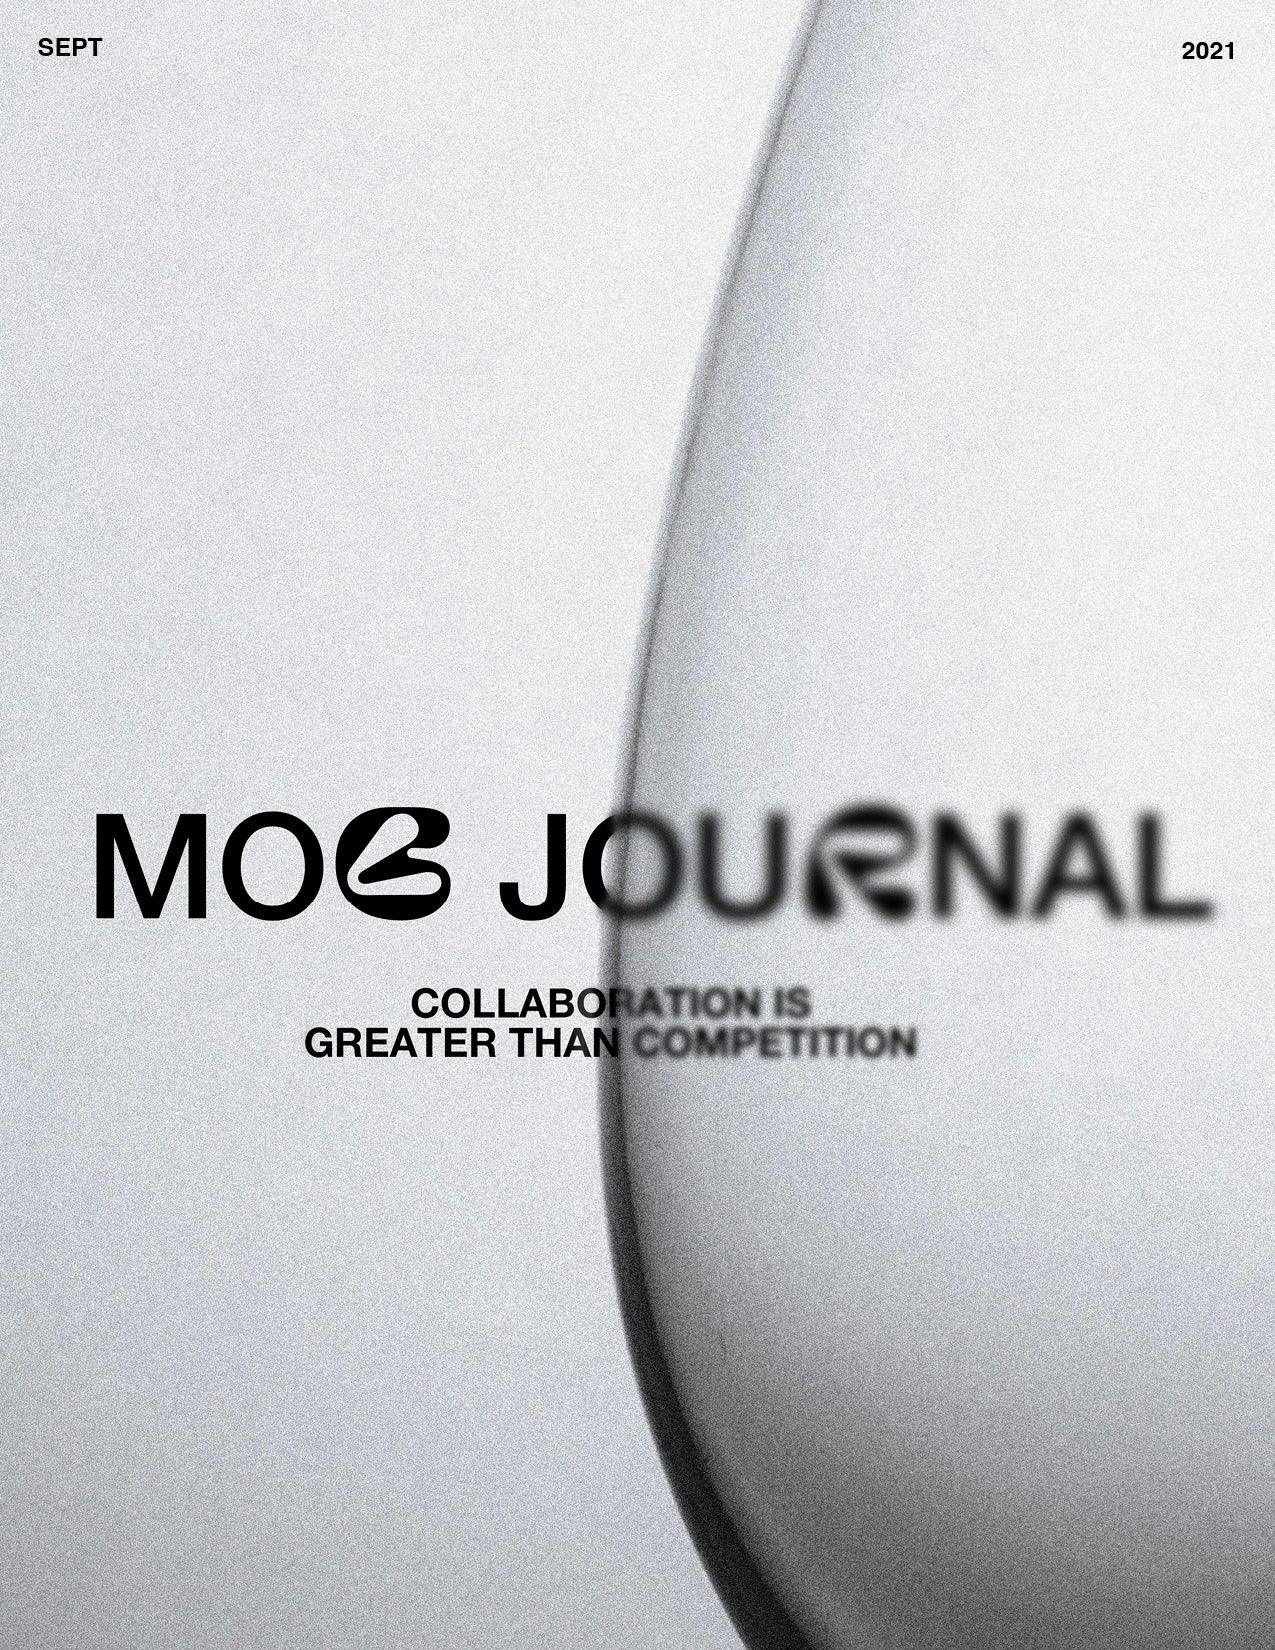 MOB JOURNAL | VOLUME SEVENTEEN | ISSUE #21 - Mob Journal